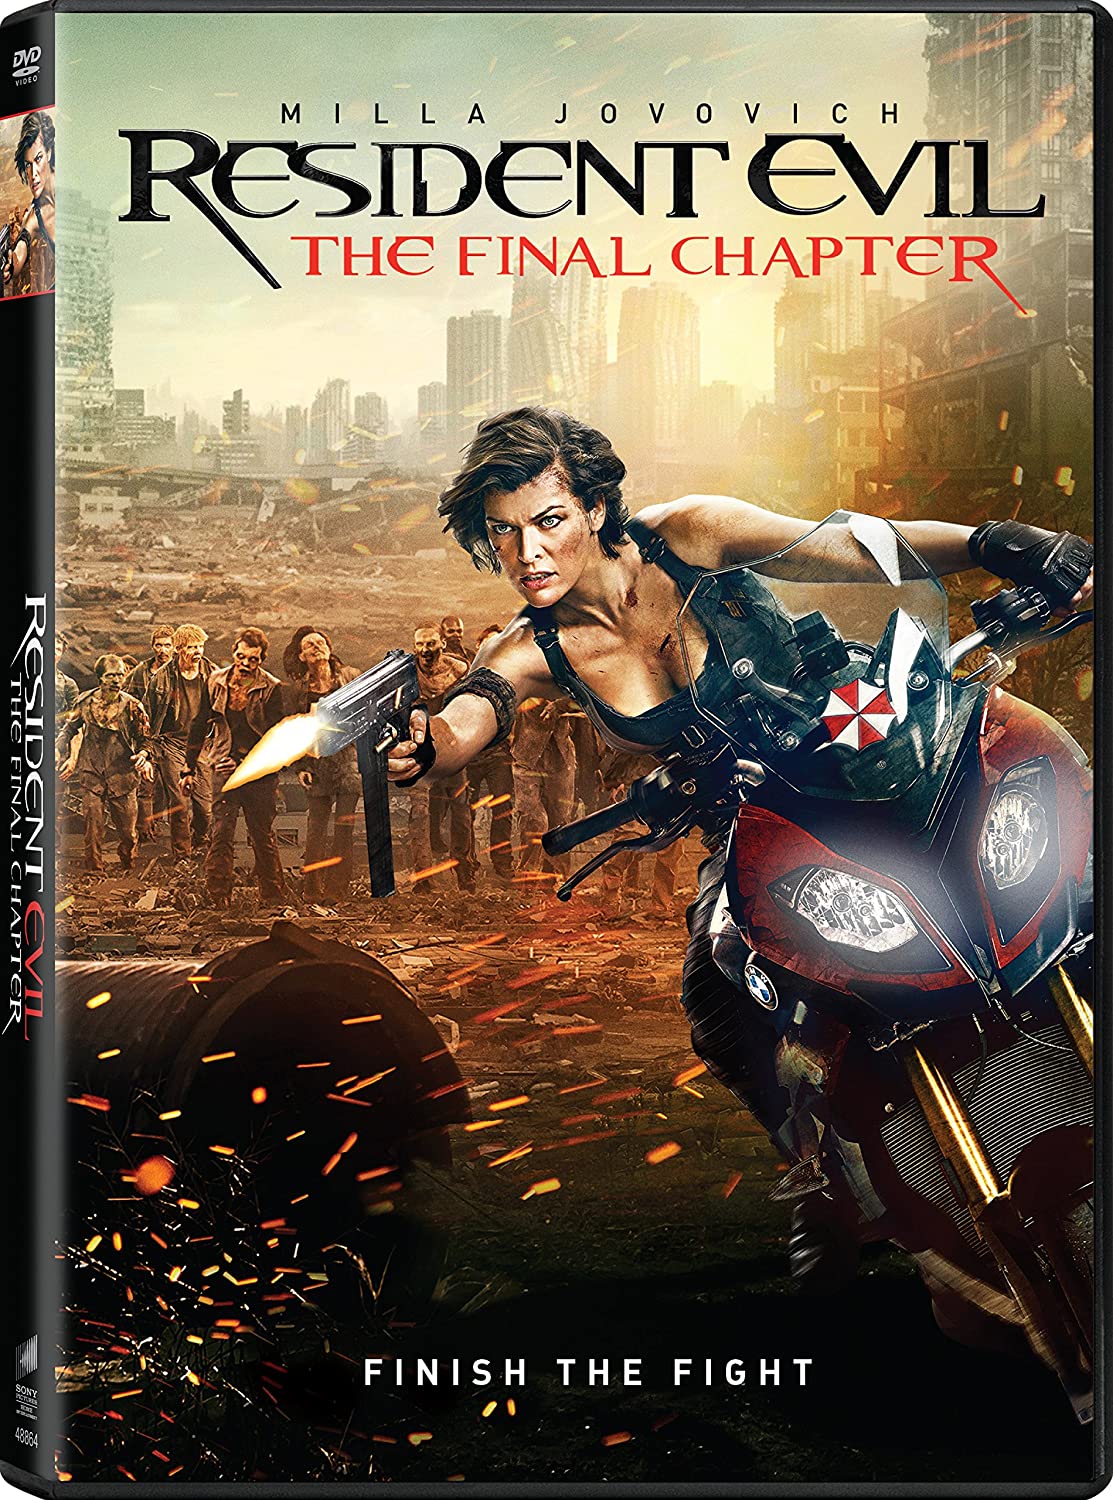 Stiahni si Filmy CZ/SK dabing Resident Evil: Posledni kapitola / Resident Evil 6: The Final Chapter (2016)(CZ) = CSFD 52%